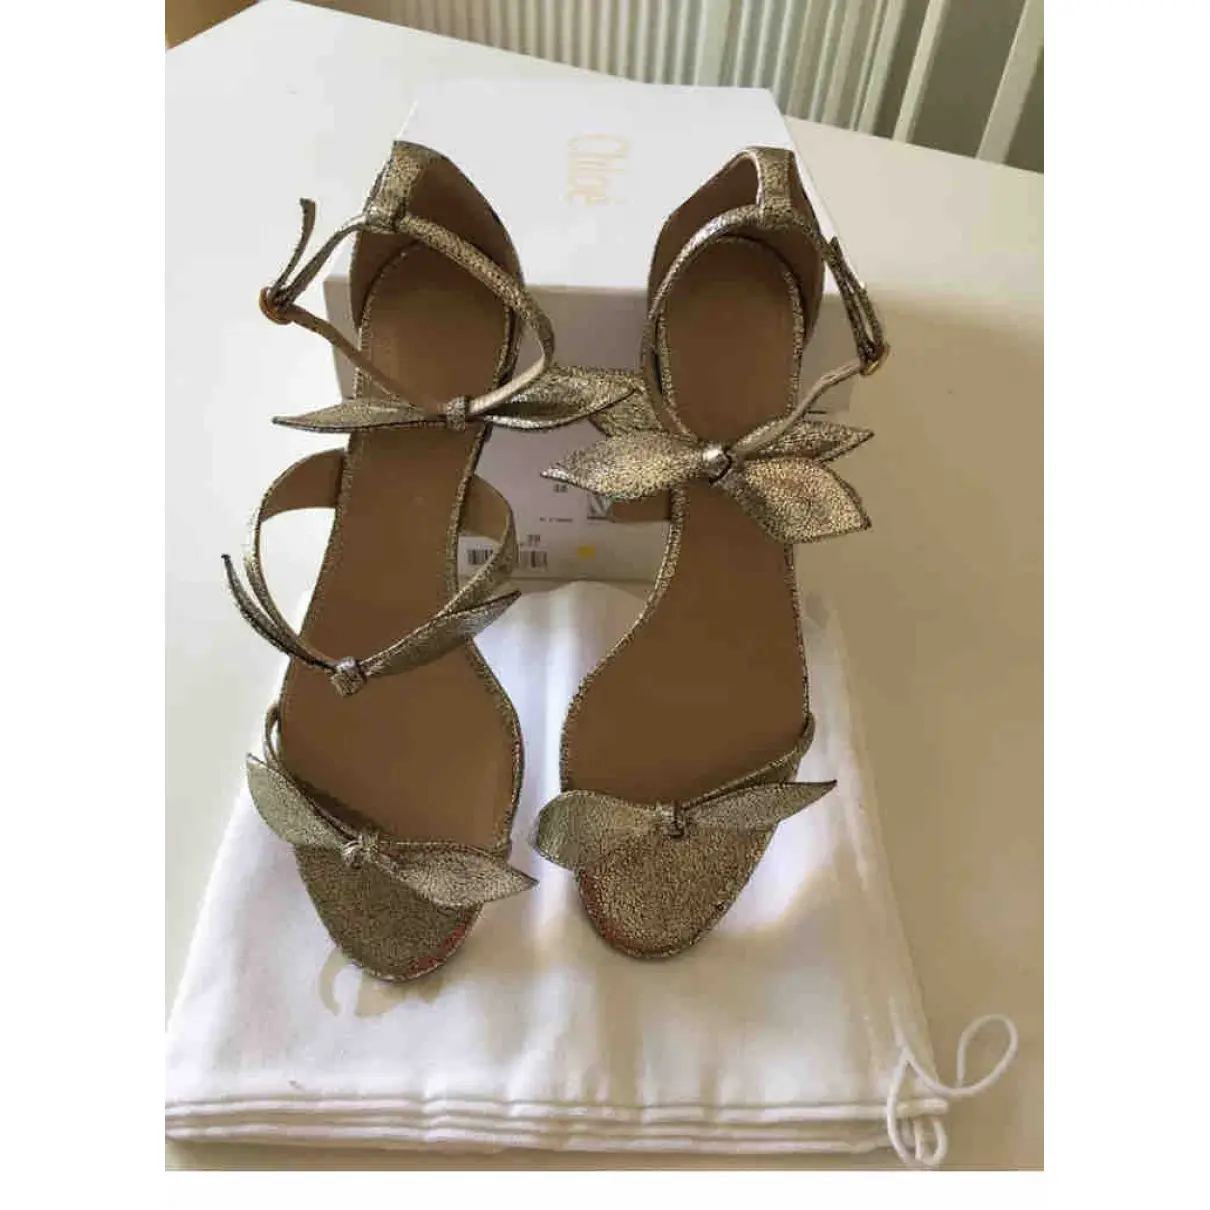 Buy Chloé Leather sandal online